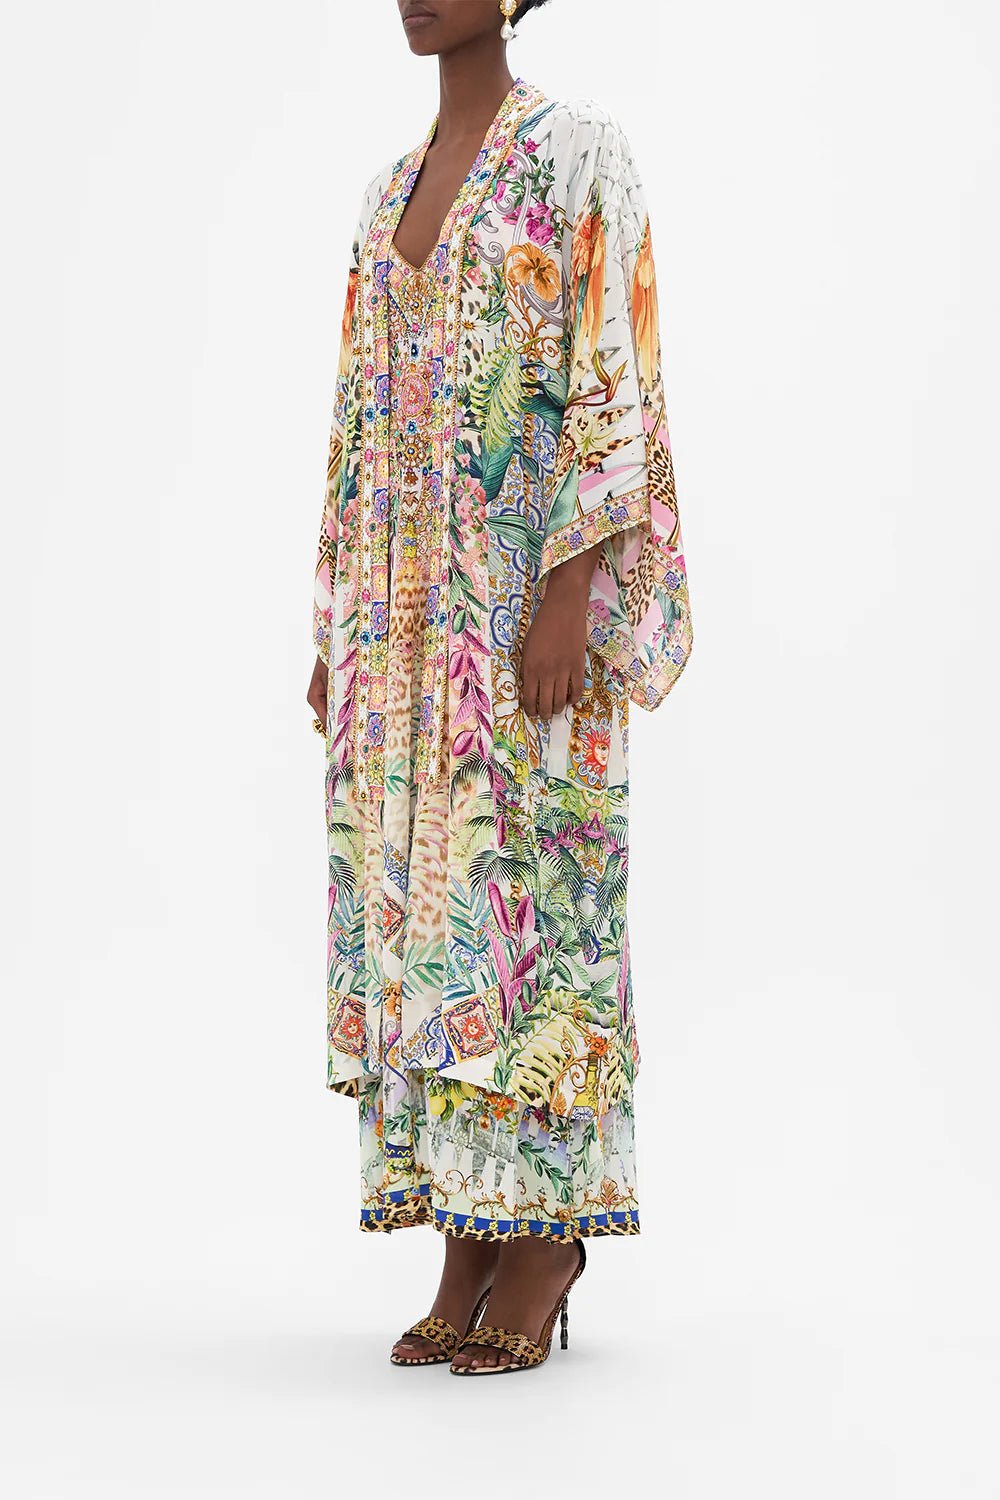 Camilla Mid Length Kimono Layer W Collar Flowers Of Neptune - Pinkhill, Darwin boutique, Australian high end fashion, Darwin Fashion